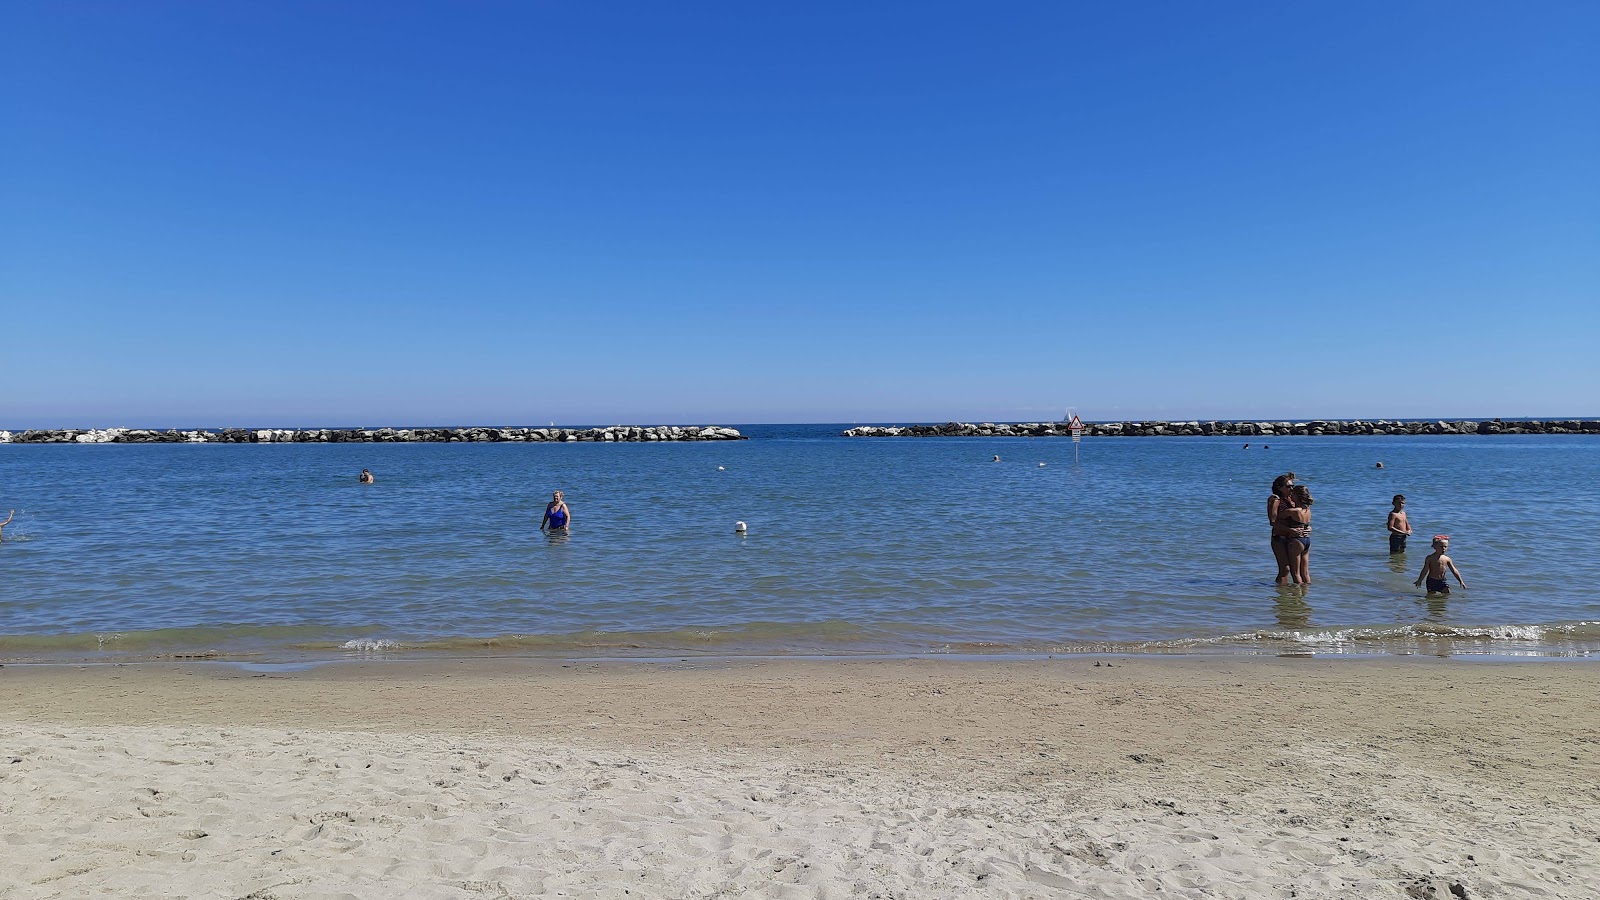 Foto av Spiaggia di Gatteo Mare med rymlig strand